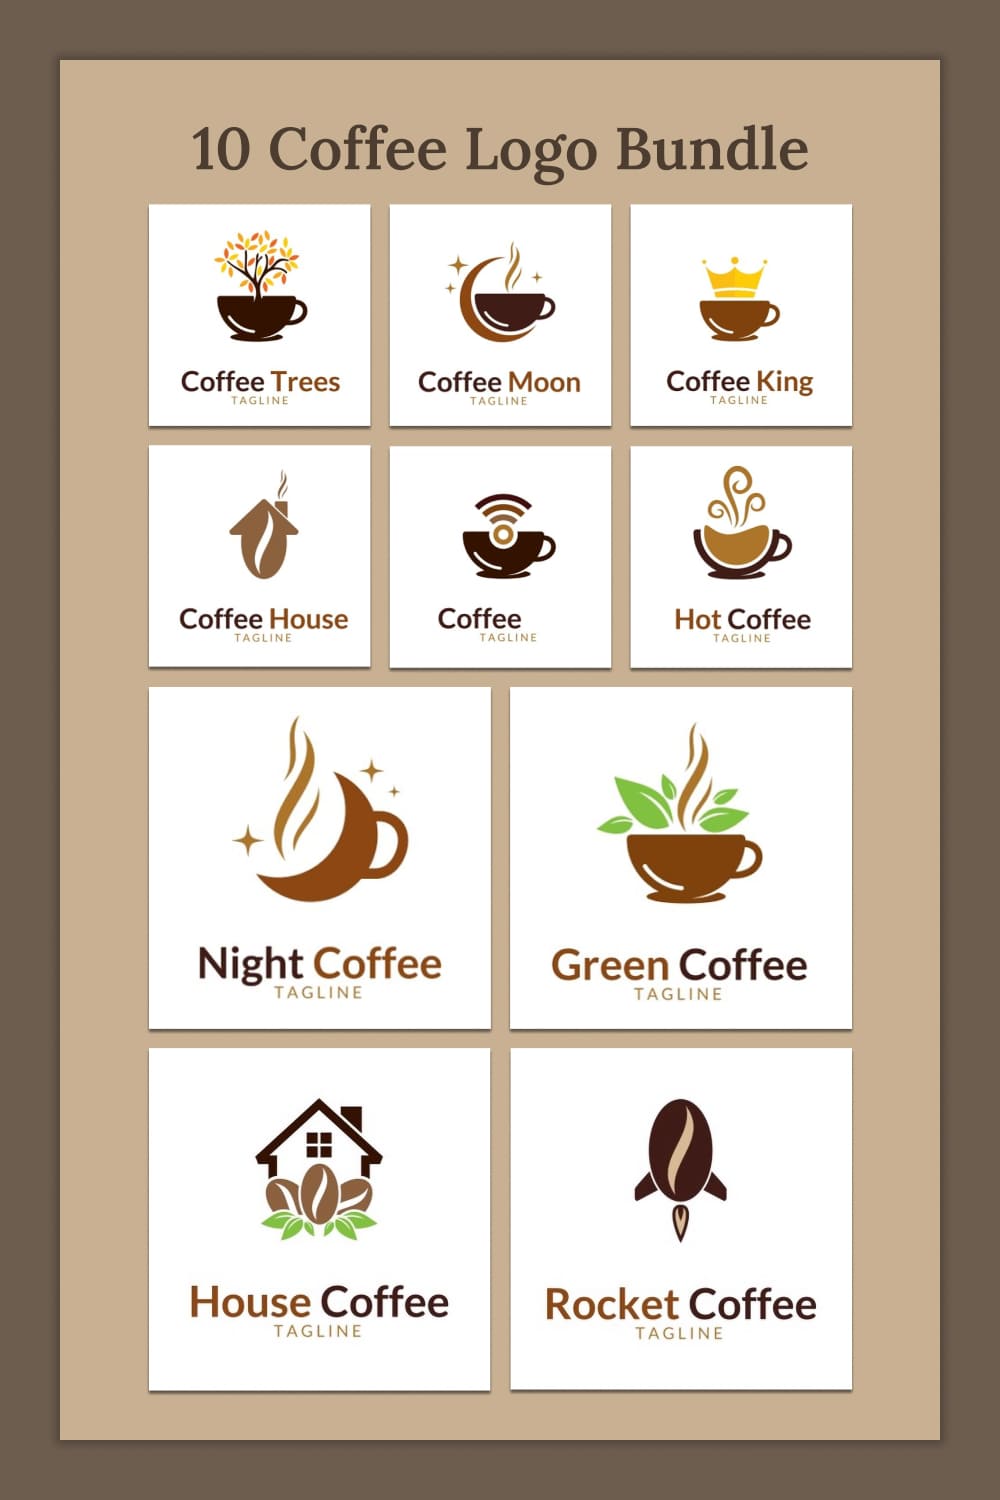 10 coffee logo bundle - Pinterest image preview.